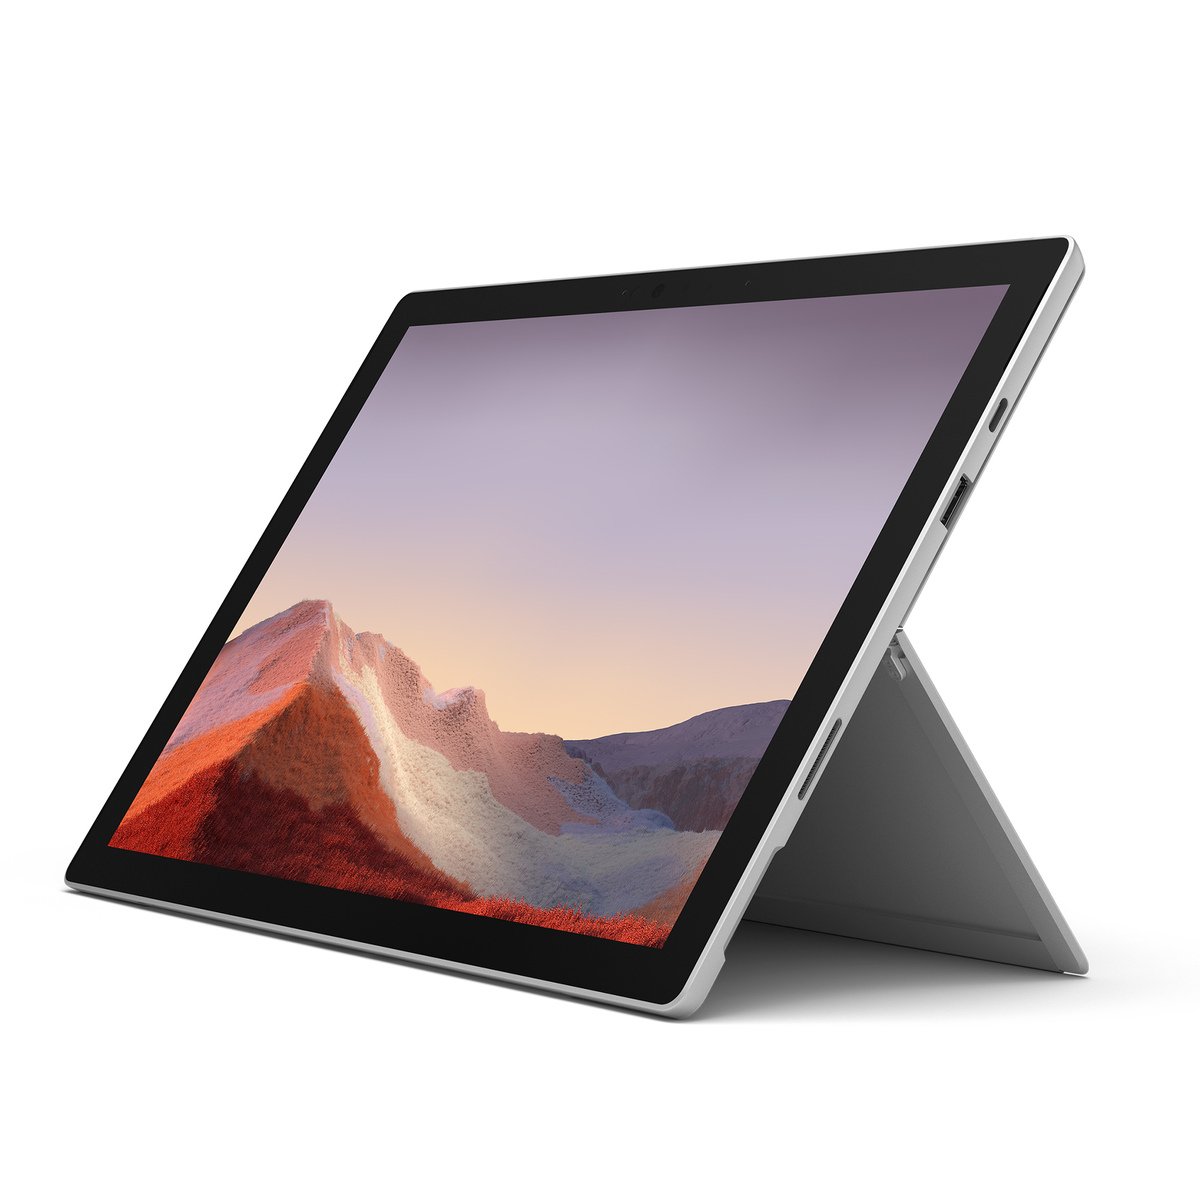 Microsoft Surface Pro 7,Intel Core i3,4GB RAM,128GB SSD,12.3" Touch Screen ,Windows 10 Home,Platinum